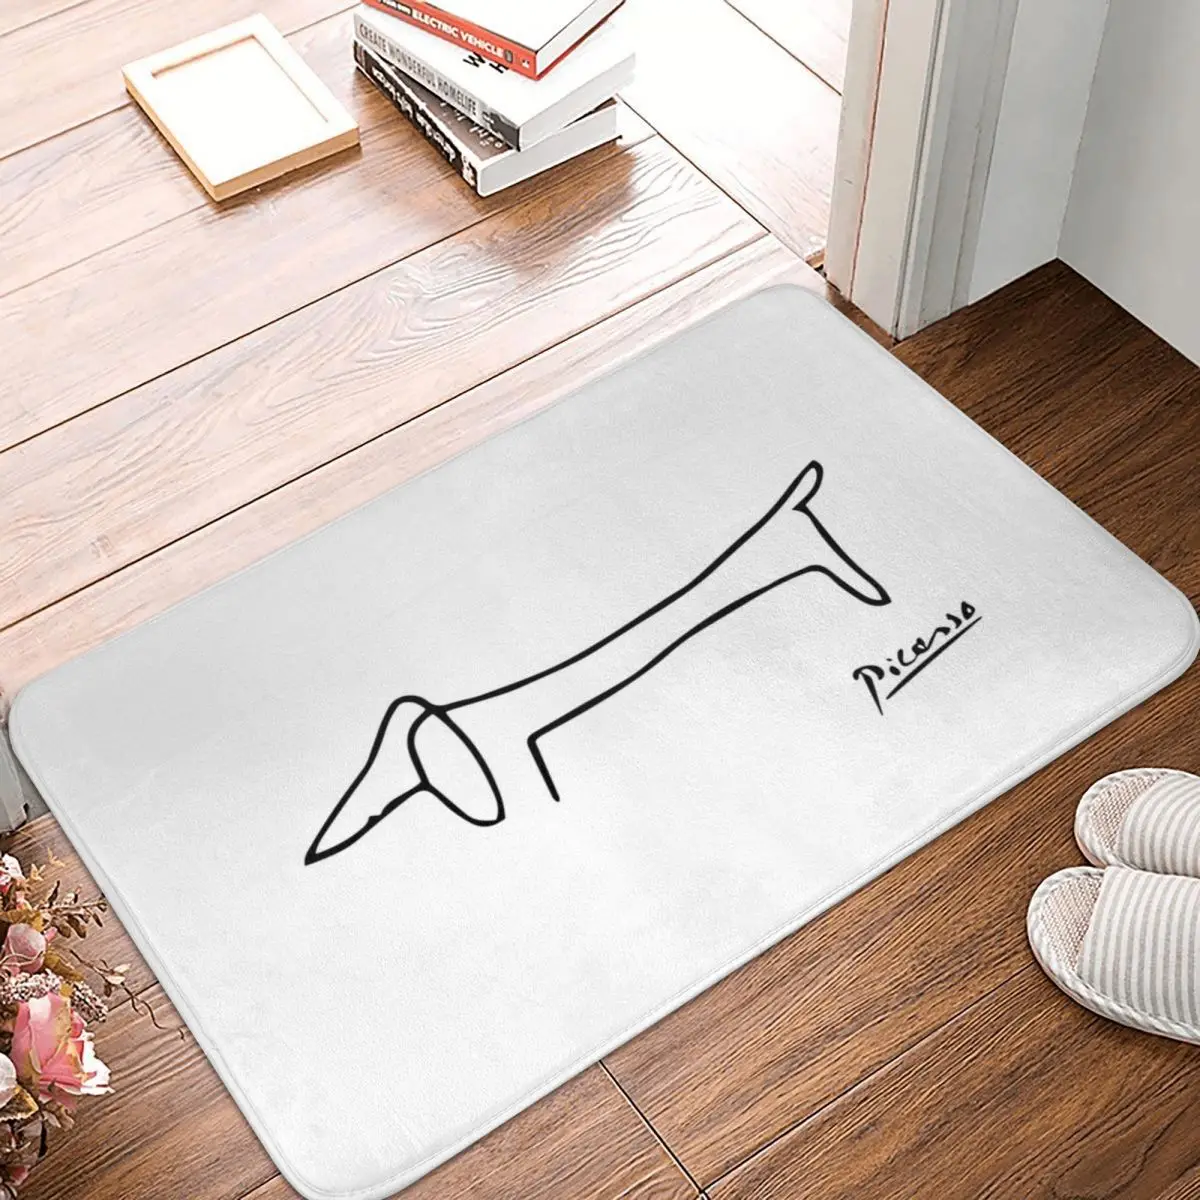 

Pablo Picasso Dog Lump Doormat Carpet Mat Rug Polyester Anti-slip Floor Decor Bath Bathroom Kitchen Living Room 40x60